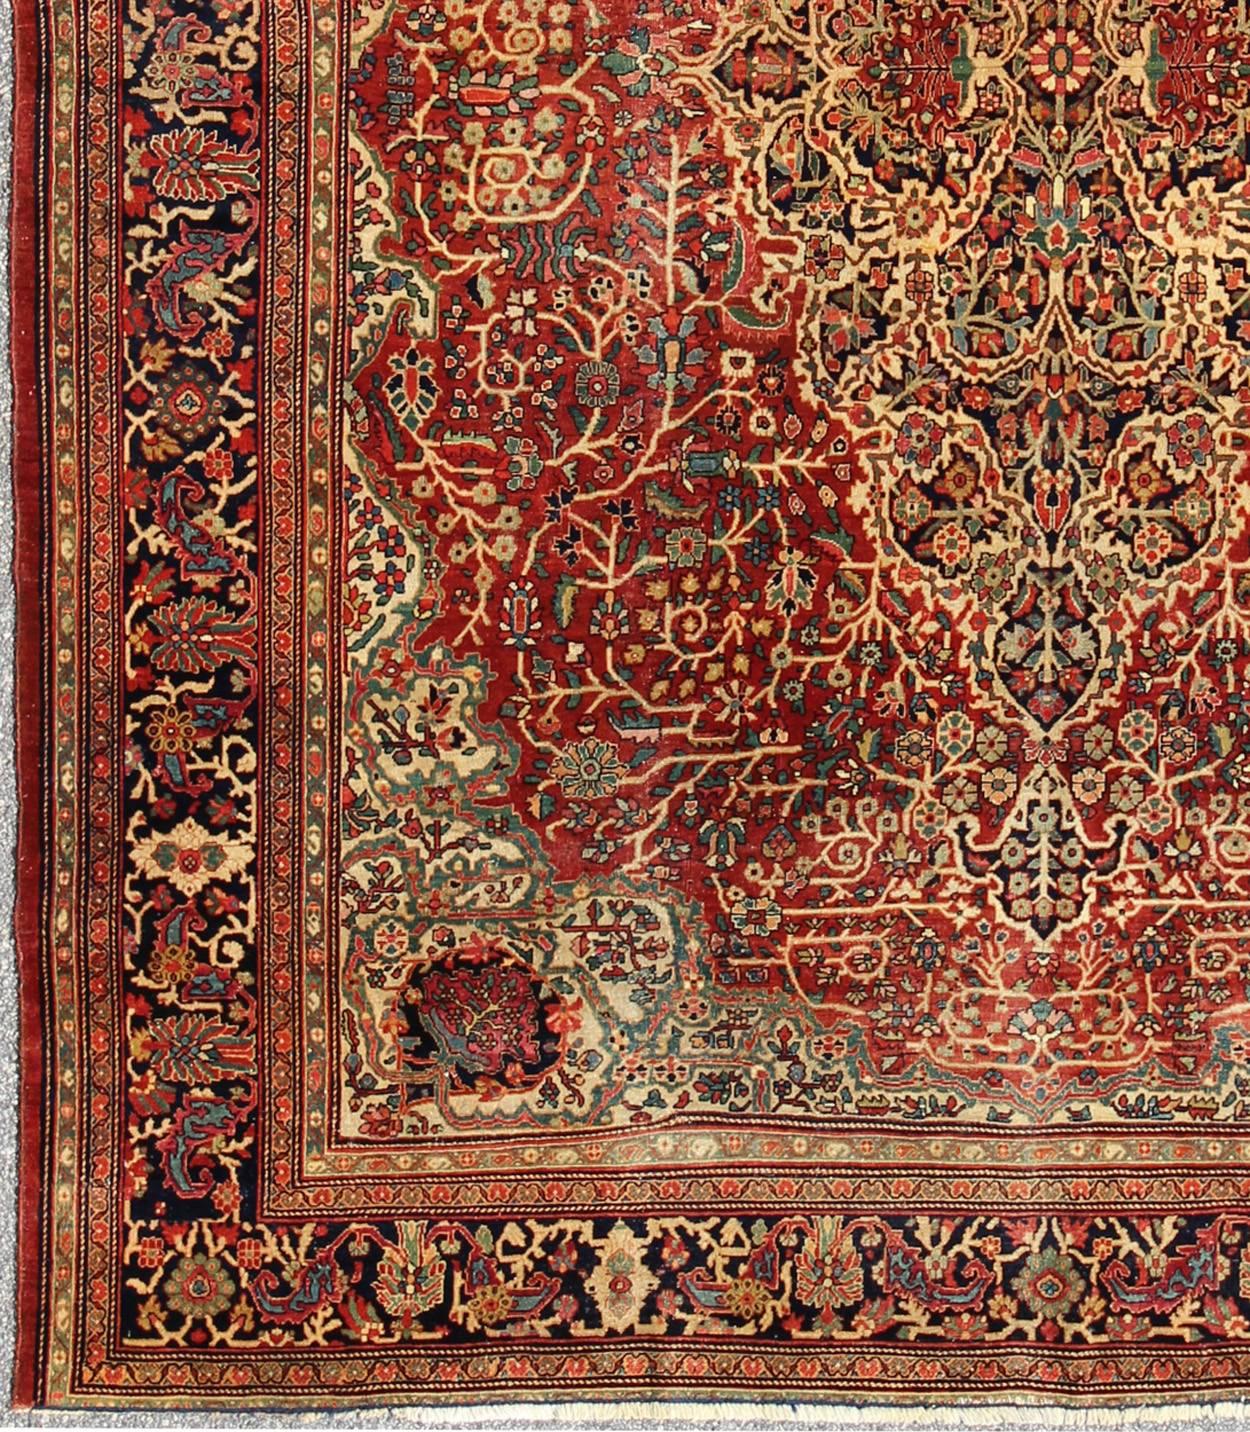 Classic design Antique Persian Rug with intricate Design, Keivan Woven Arts / rug TRA-120702, country of origin / type: Iran / Sarouk Feraghan , circa 1890.

Measures: 8'10 x 11'6 

This outstanding antique Farahan Sarouk carpet is primarily